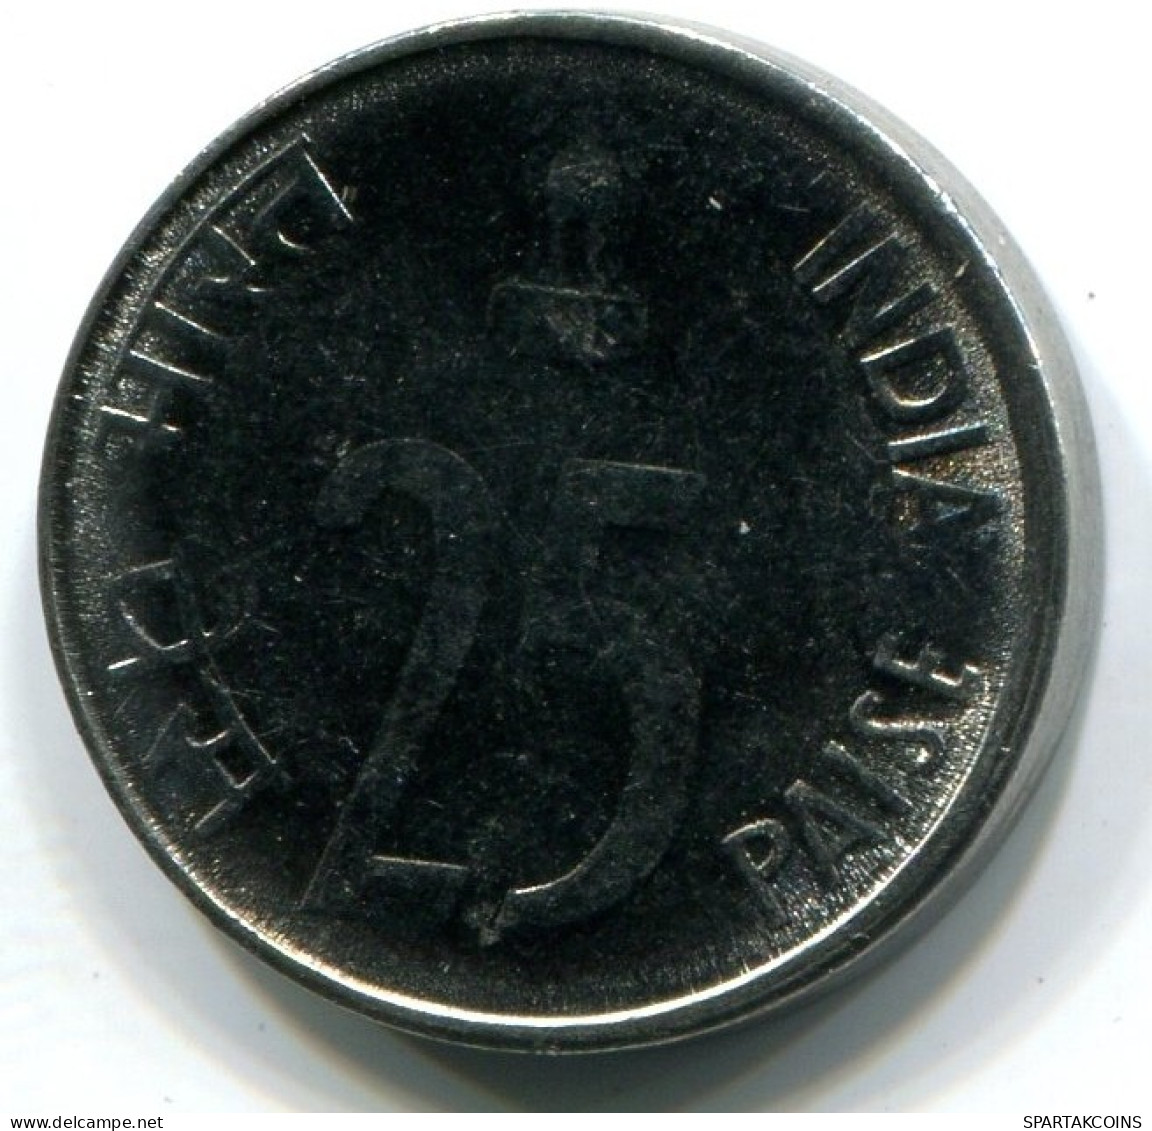 25 PAISE 1999 INDIA UNC Coin #W11391.U.A - India